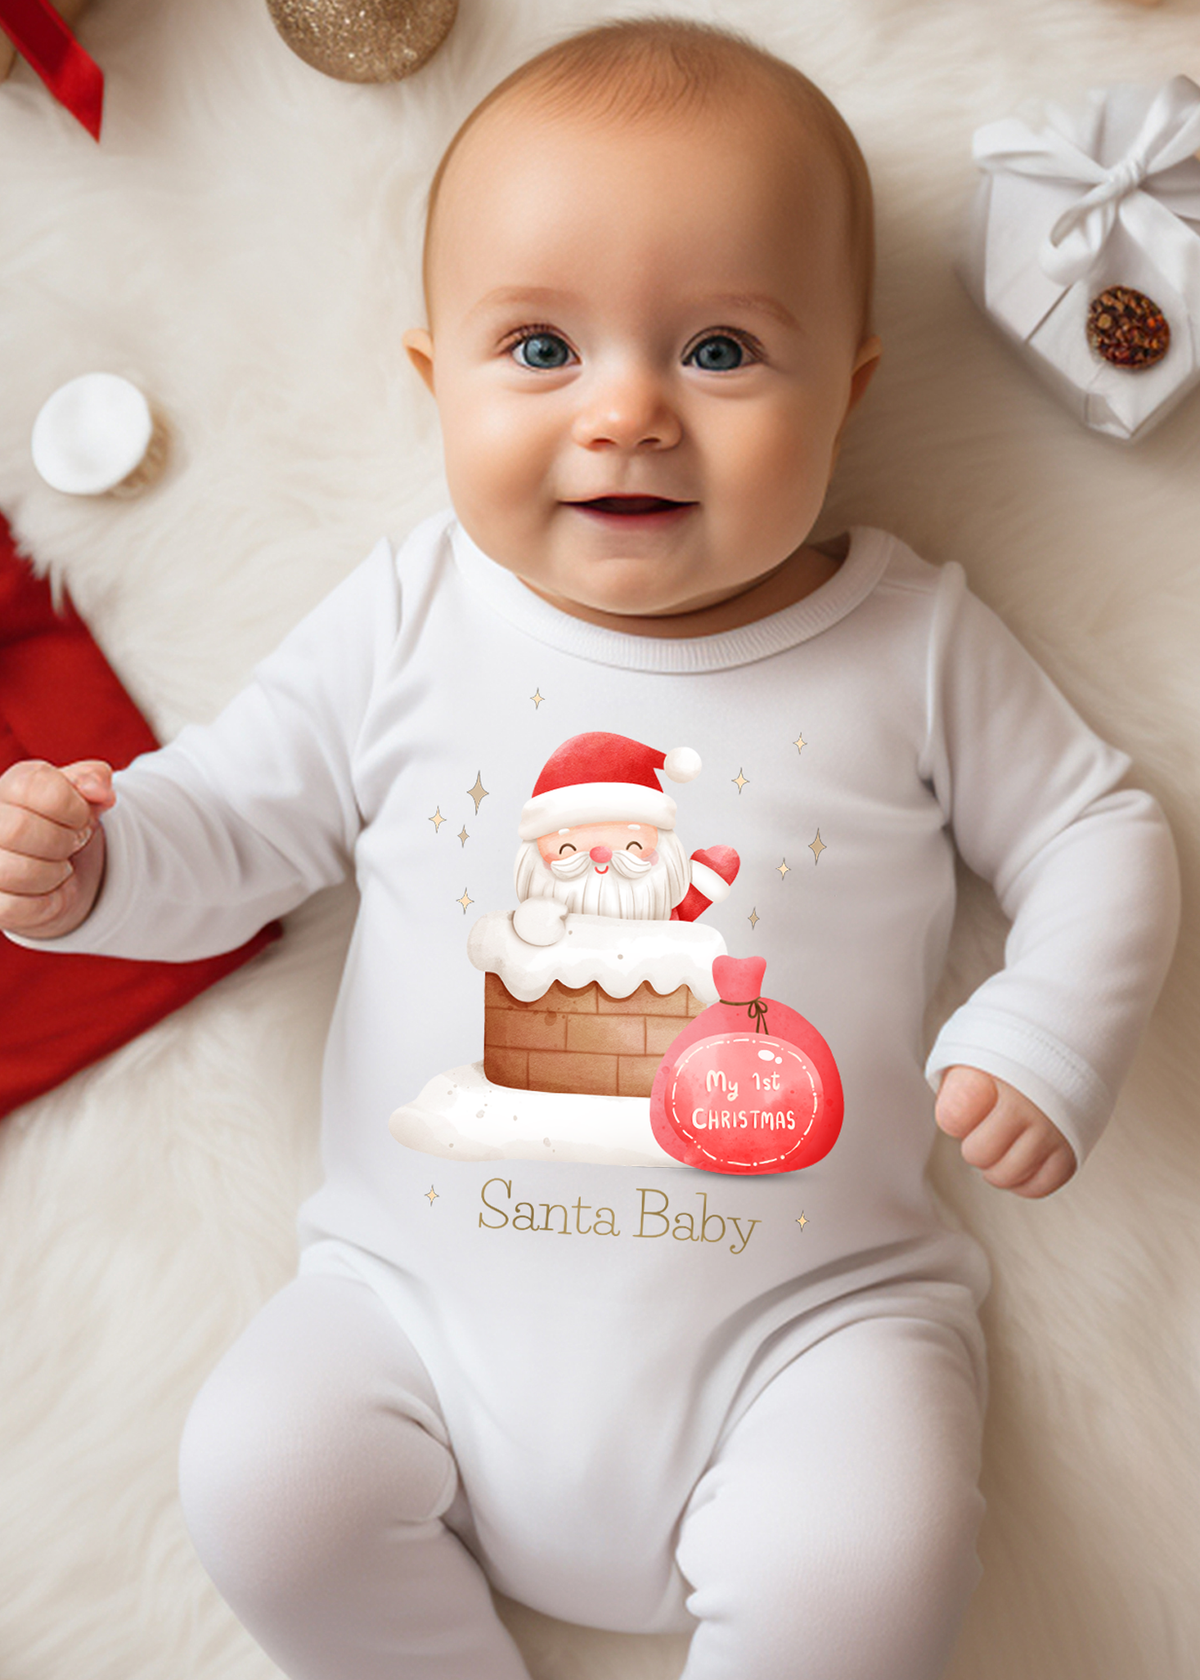 Santa Baby First Christmas Printed Baby Sleepsuit or Vest